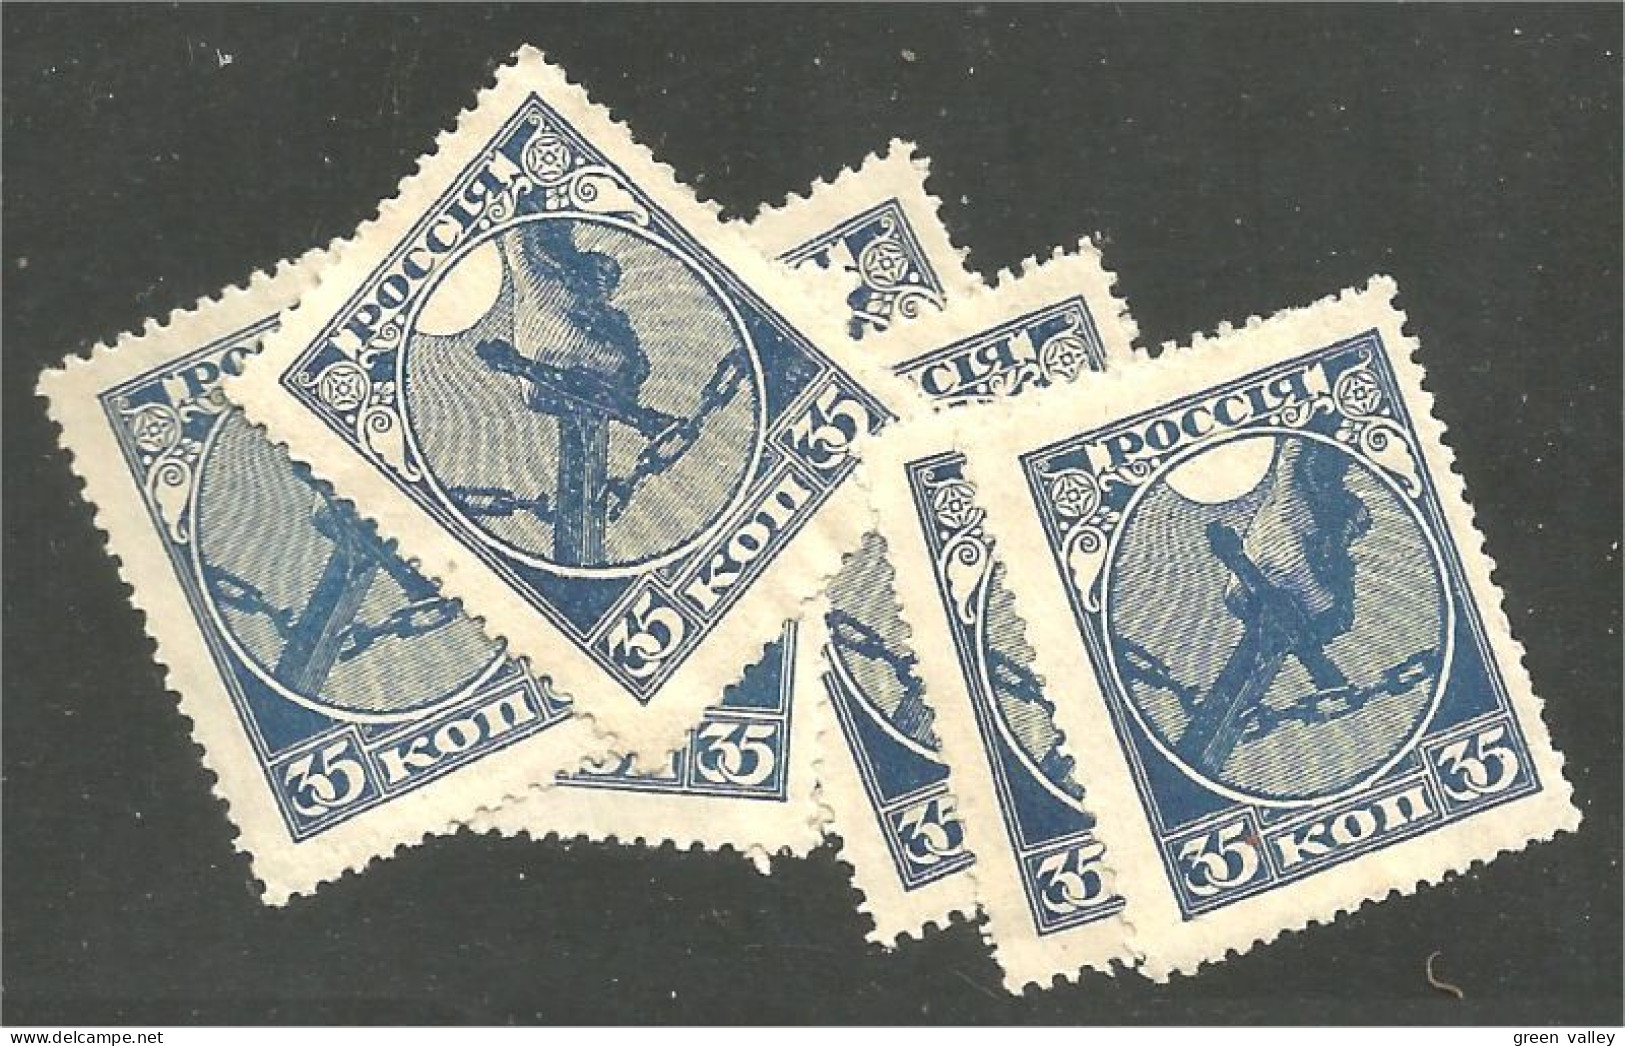 771 Russie 35k Blue Bleu 1918 7 Stamps For Study Chaines Brisées Severing Chains Bondage No Gum Sans Gomme (RUZ-378) - Used Stamps